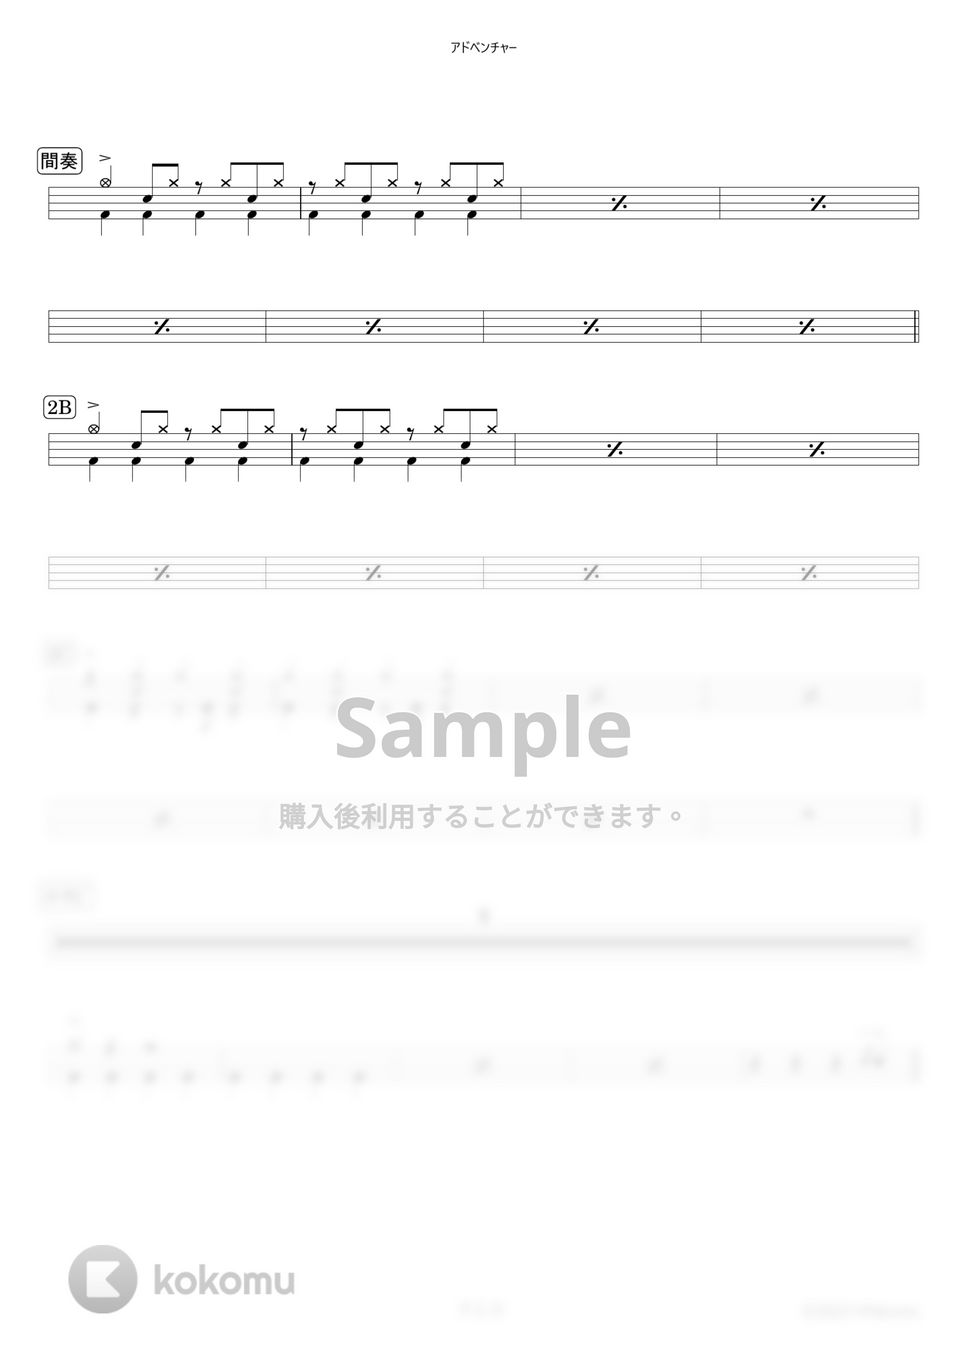 YOASOBI - アドベンチャー【ドラム楽譜・初心者向けver.】 by HYdrums